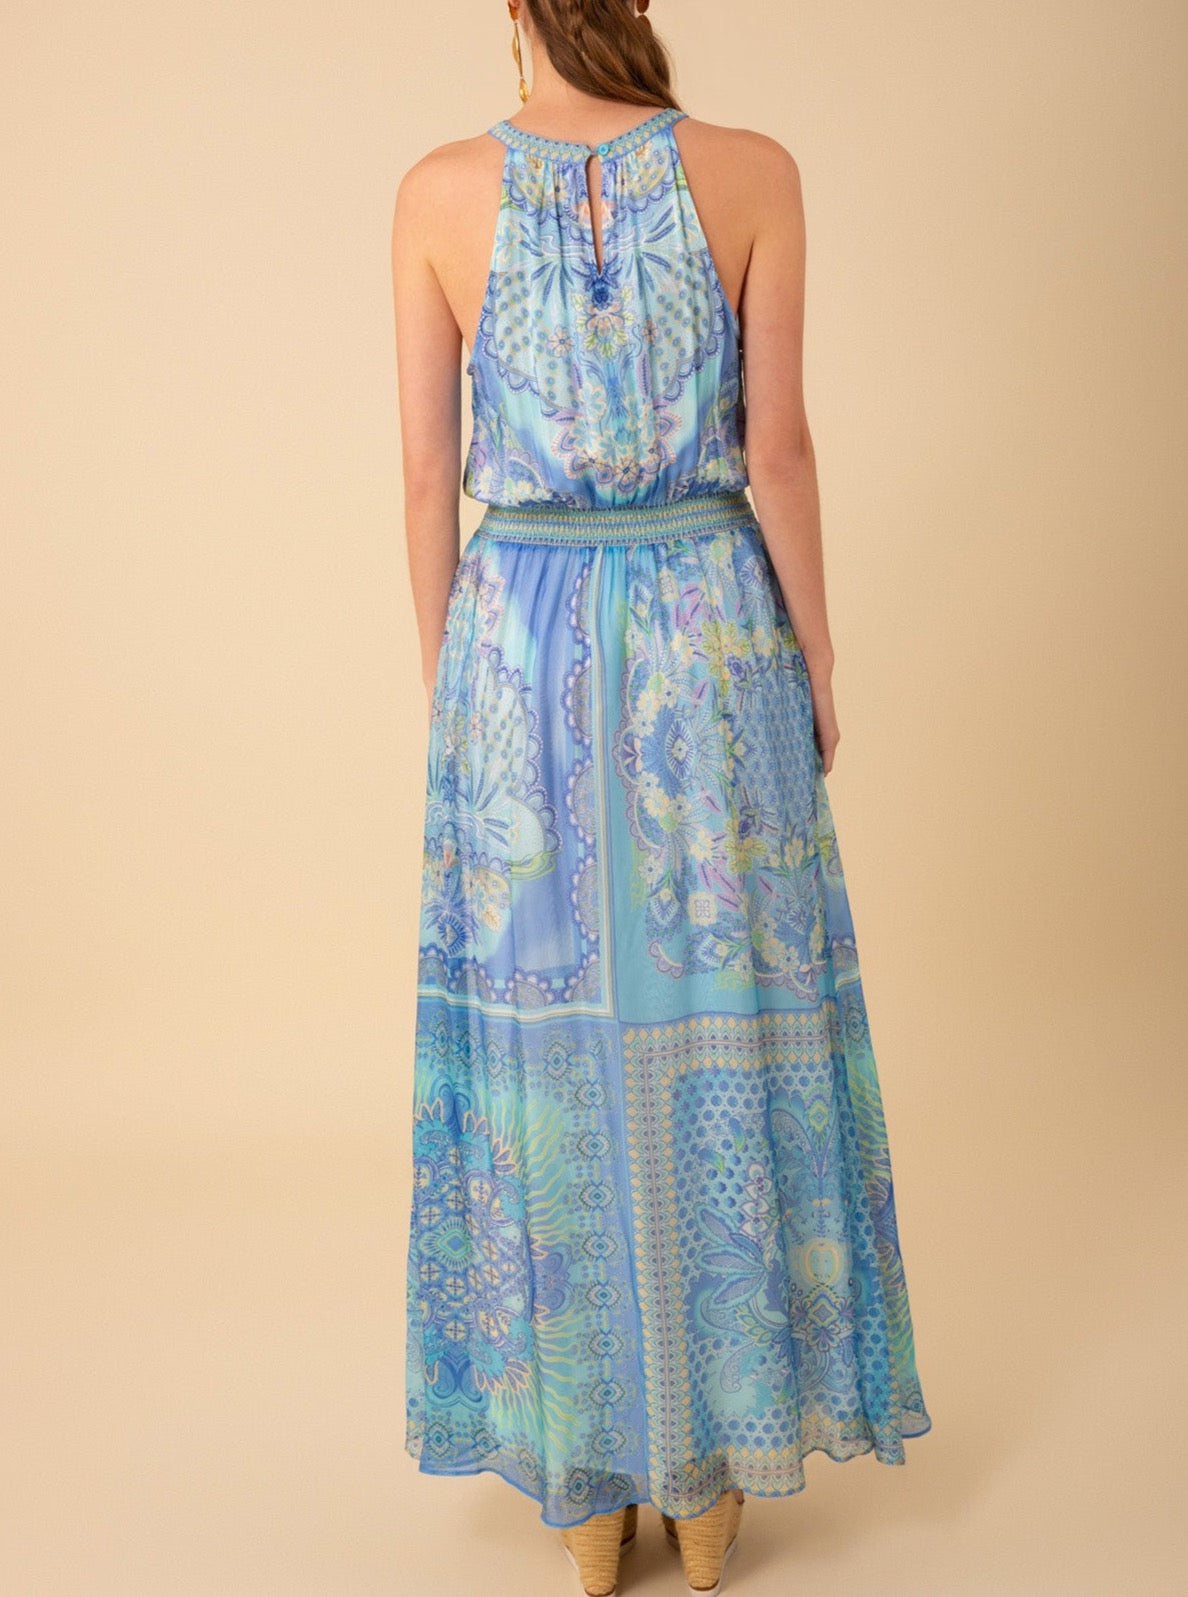 Hale Bob Magnolia Dress - Size S Available